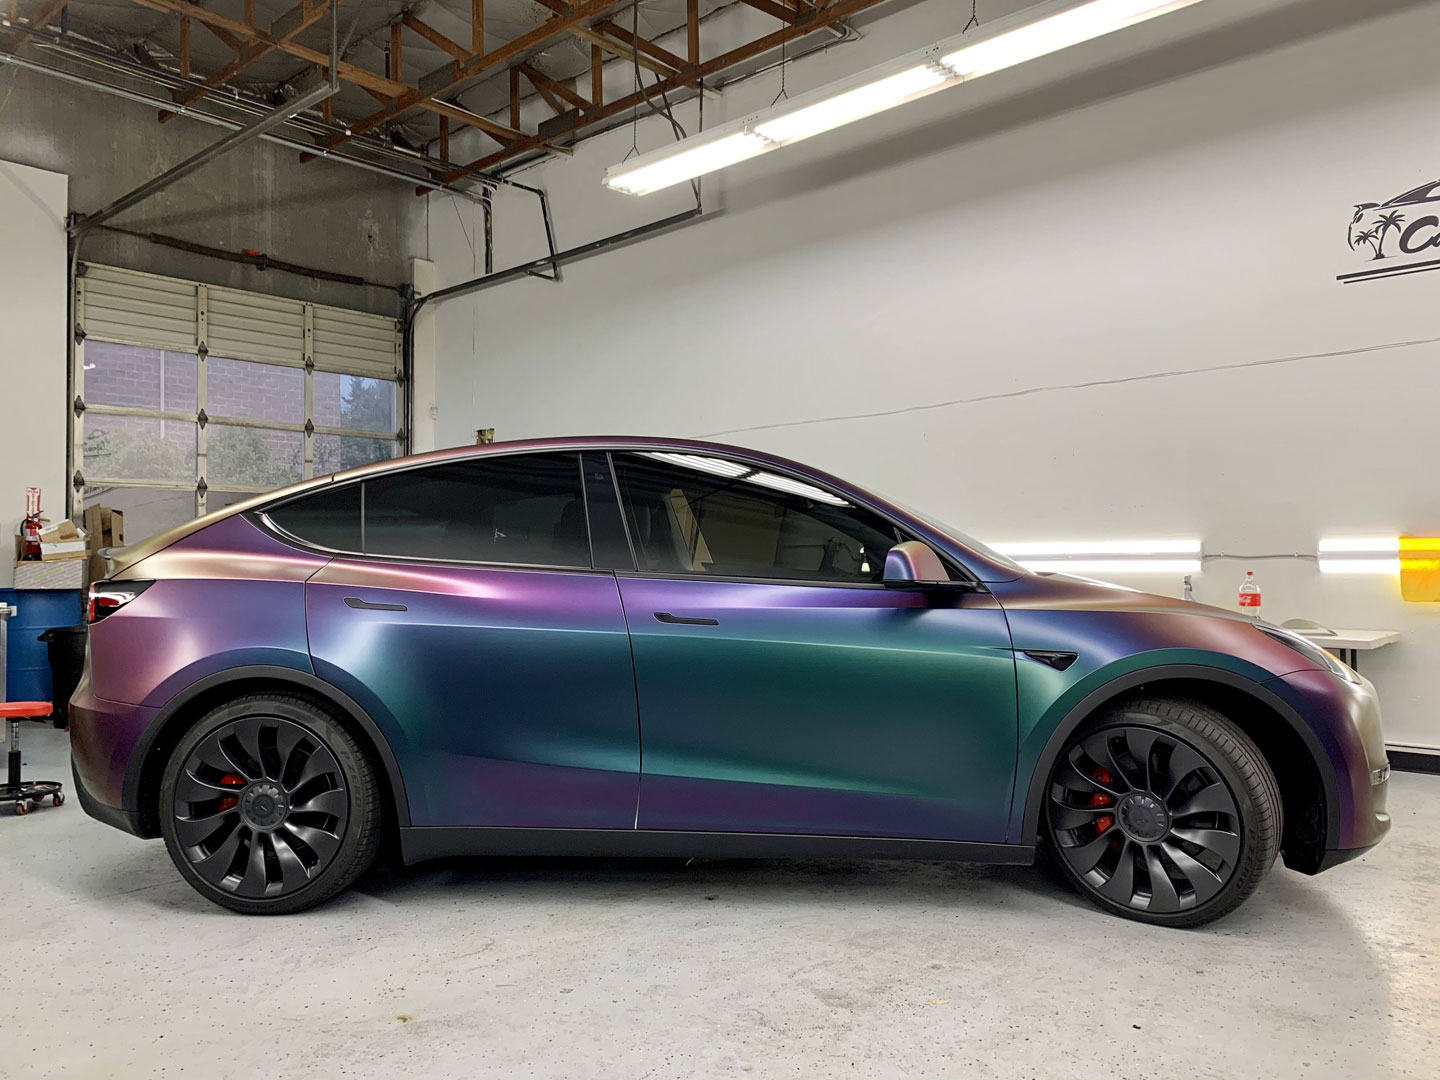 purple iridescent film on black car body